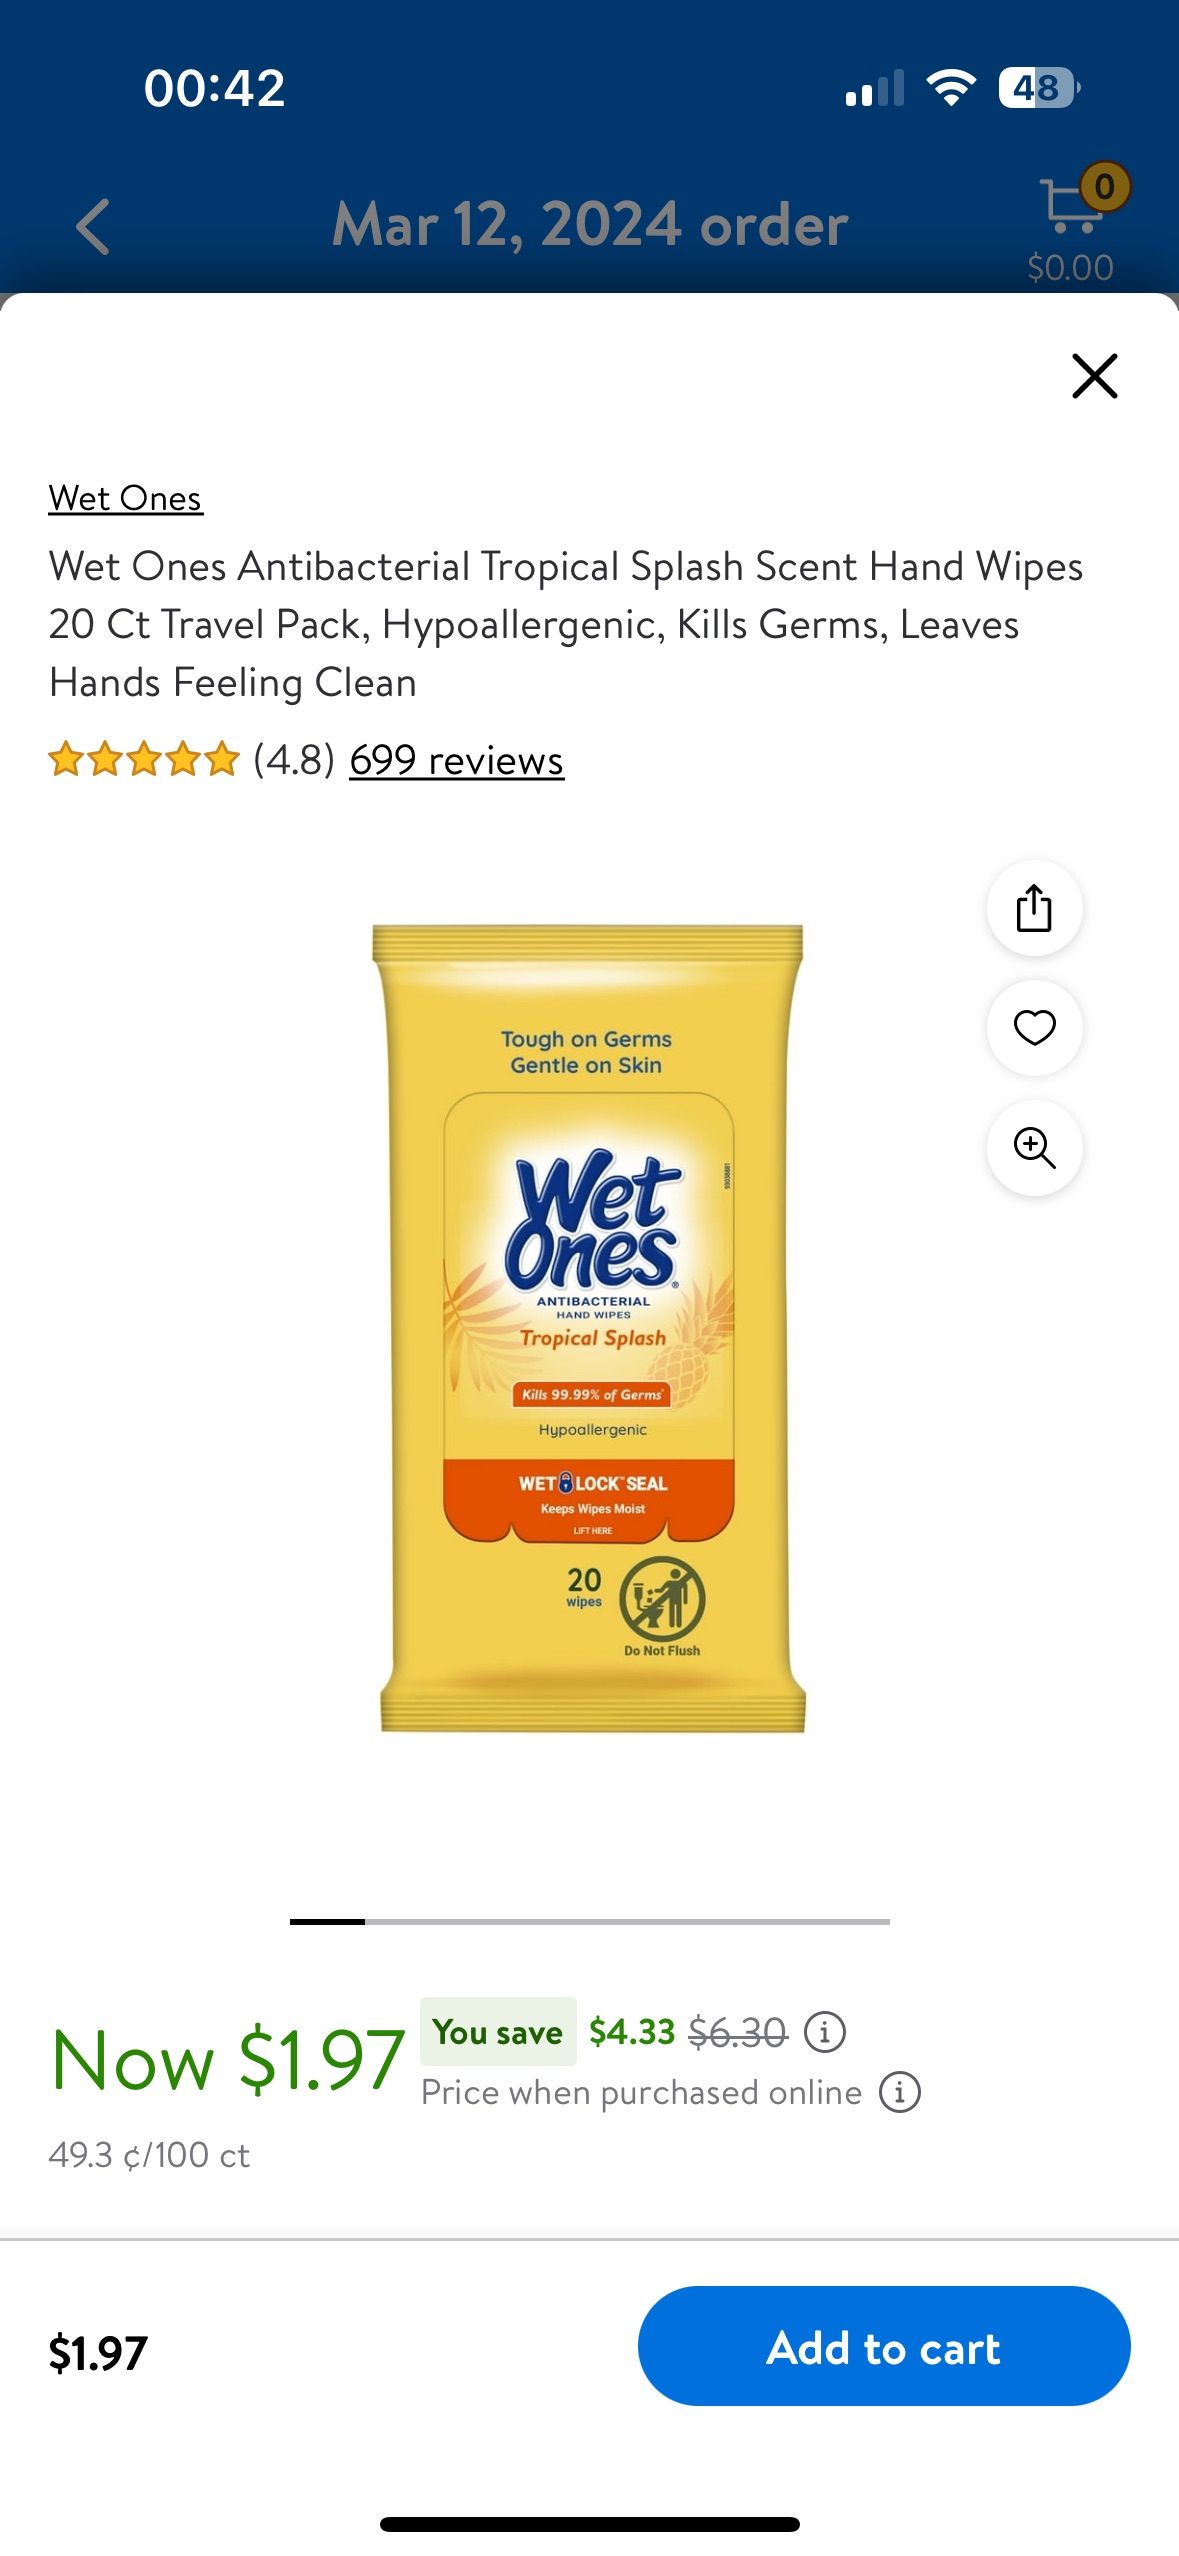 Wet Ones Antibacterial Tropical Splash Scent Hand Wipes 20 Ct Travel Pack, Hypoallergenic, Kills Germs, Leaves Hands Feeling Clean - Walmart.com